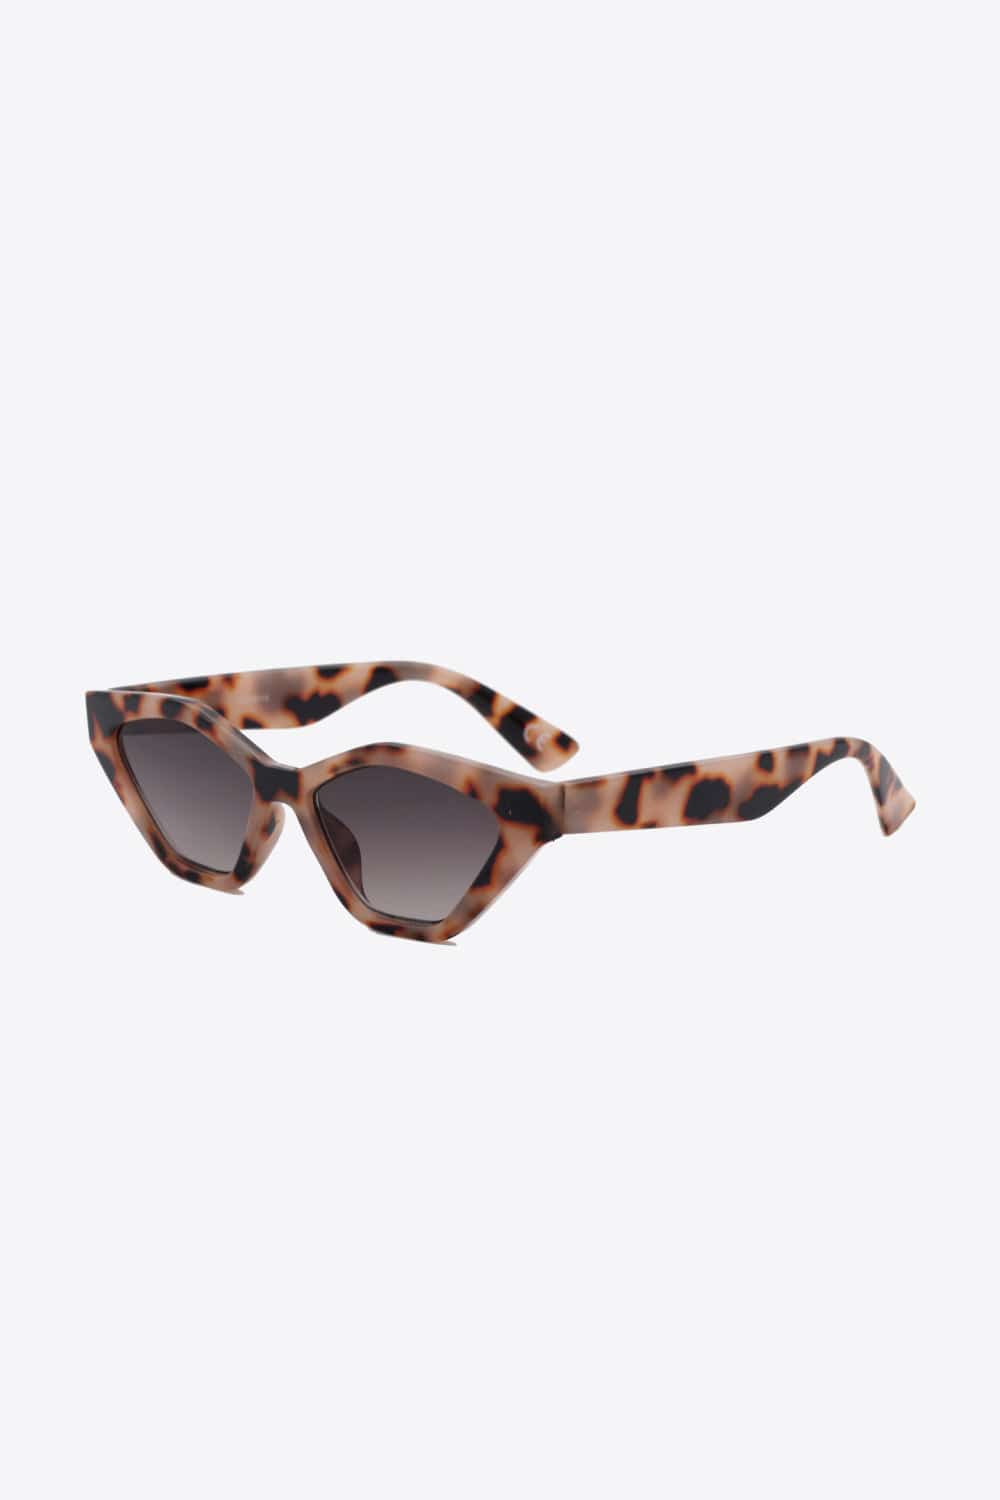 Trendsi sunglasses Leopard / One Size Cat Eye Polycarbonate Sunglasses